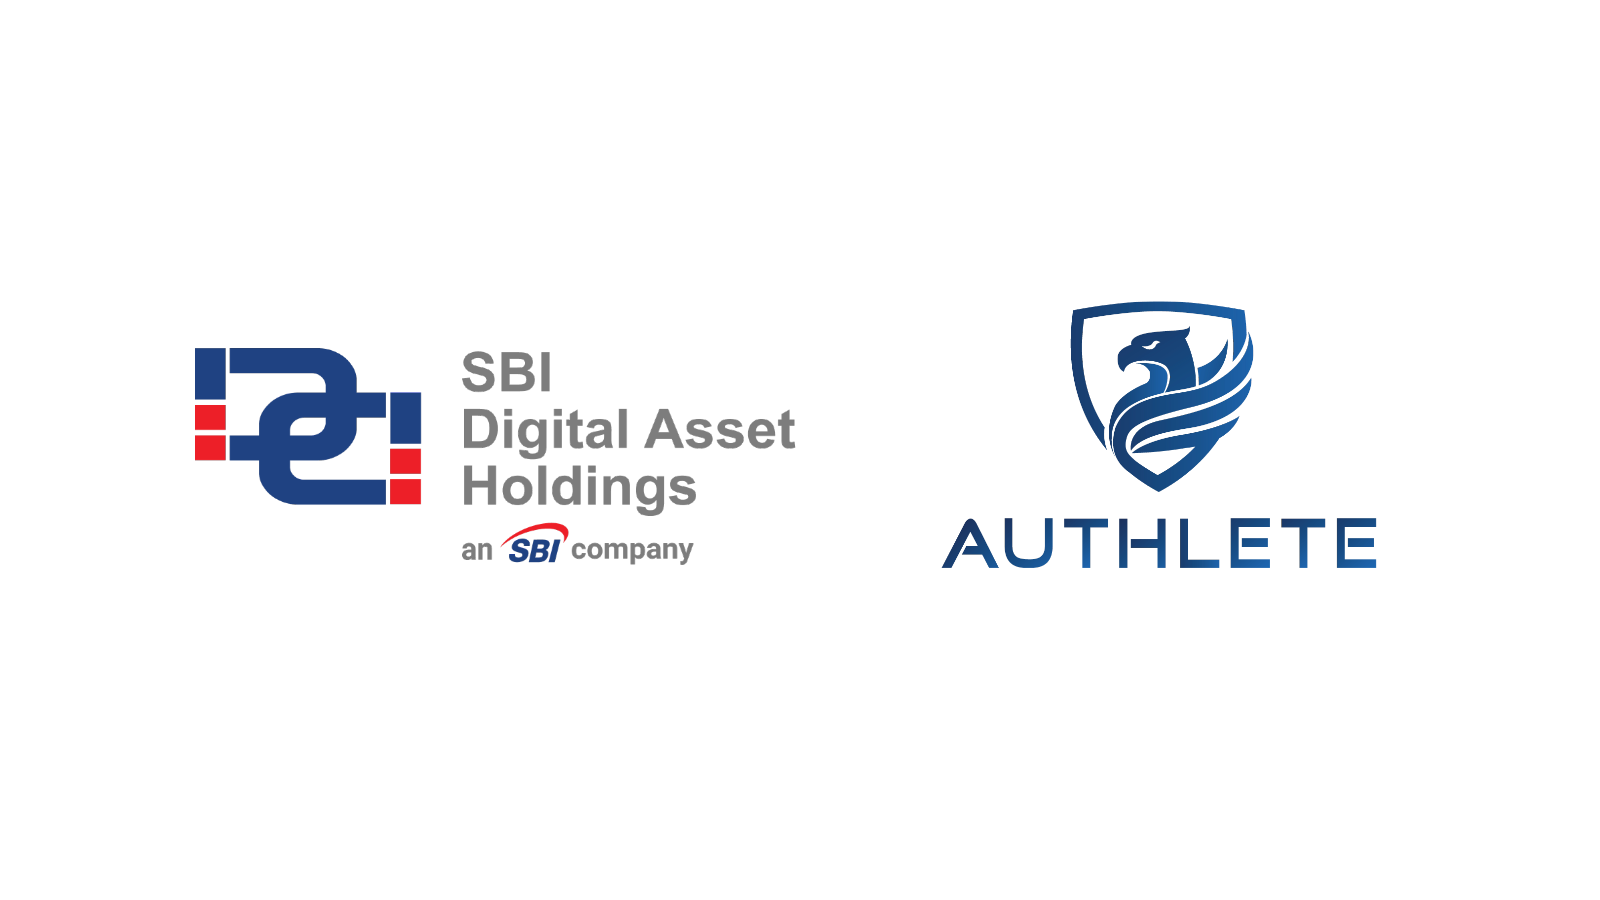 SBI DAH and Authlete logos